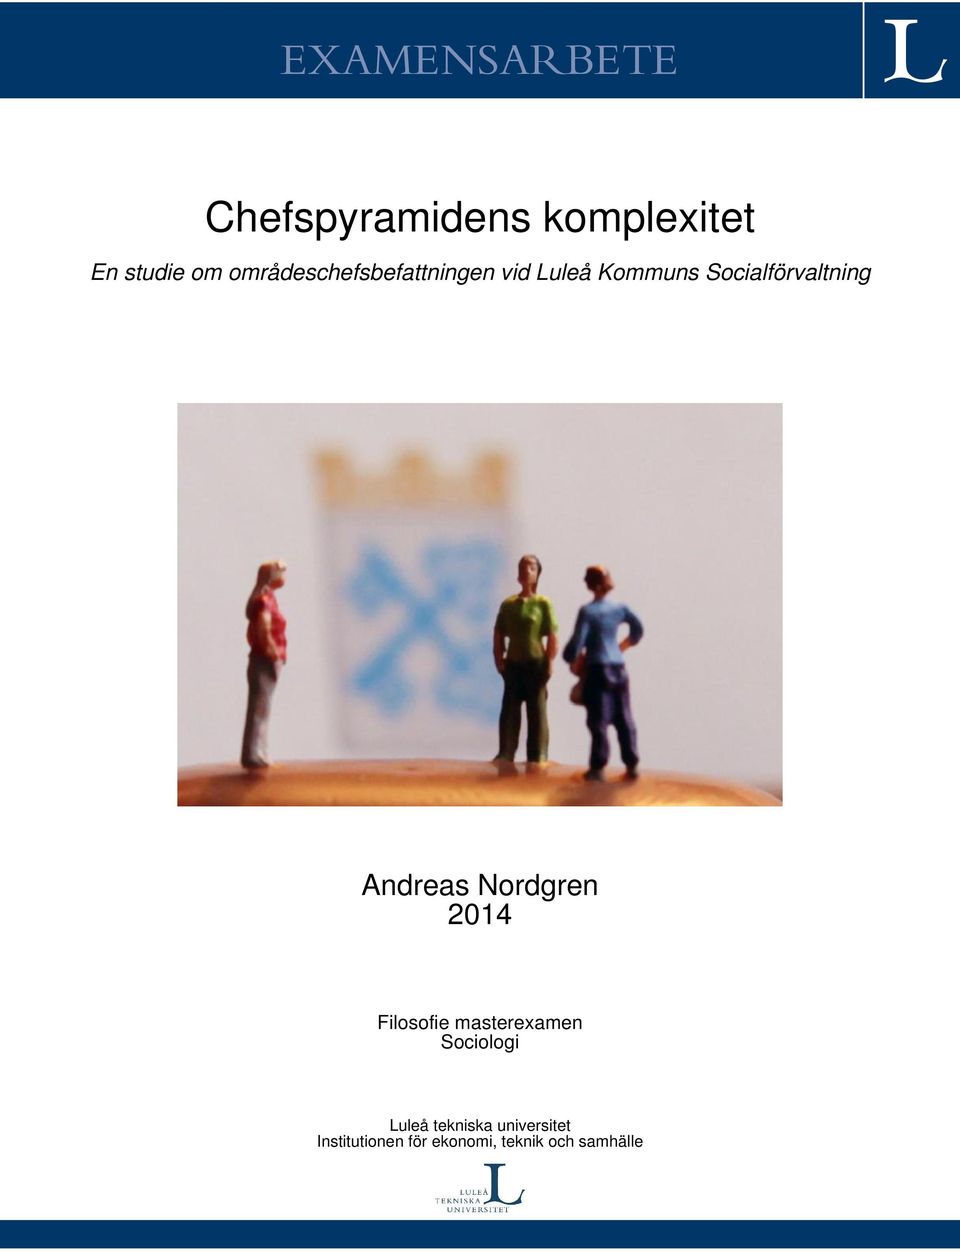 Andreas Nordgren 2014 Filosofie masterexamen Sociologi Luleå